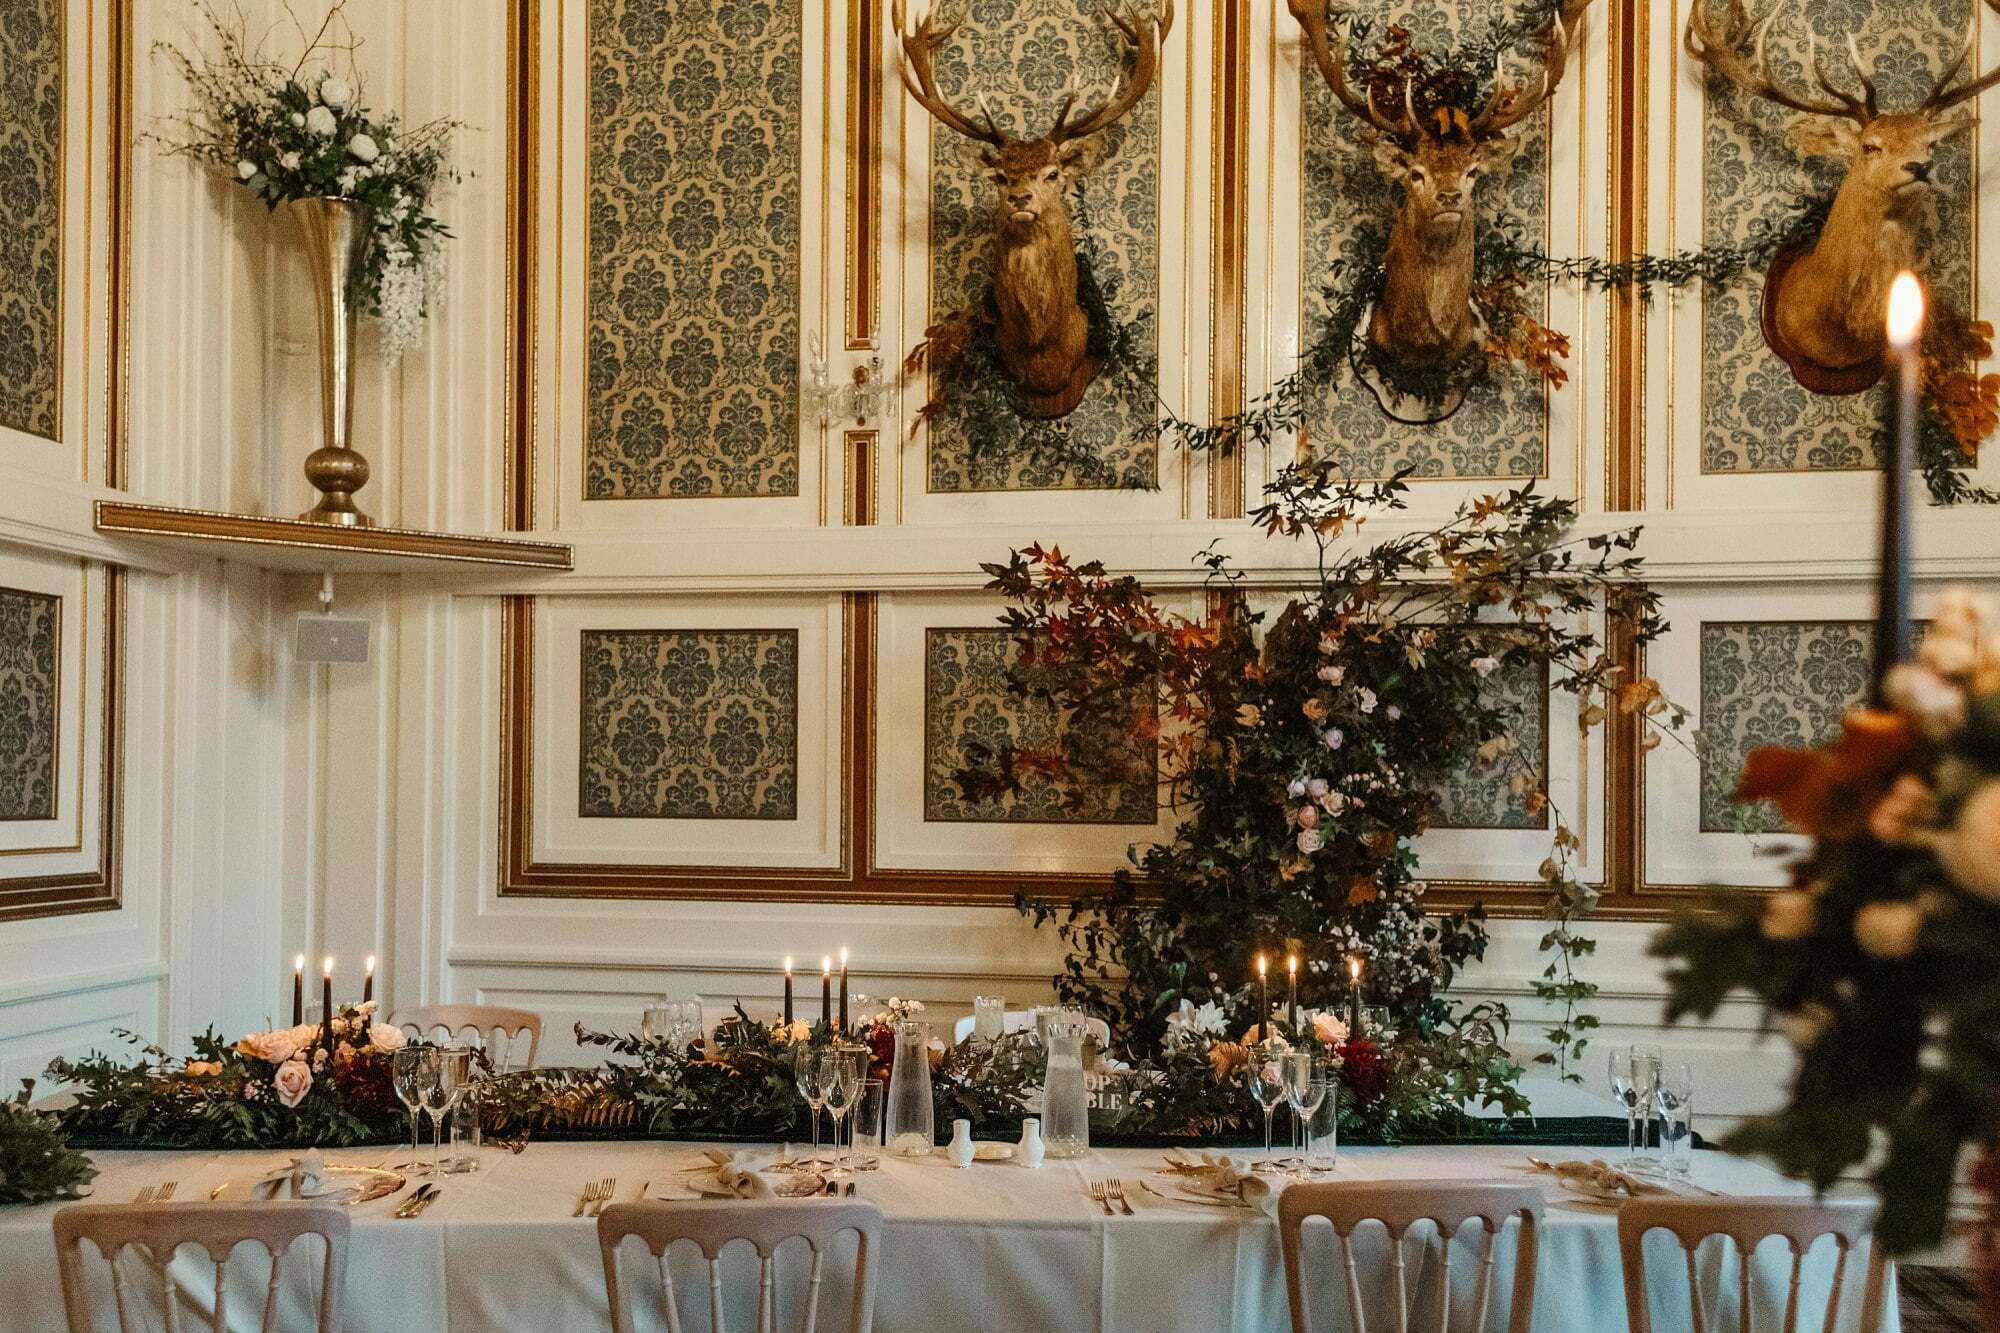 drumtochty castle wedding grand ballroom wedding set up top table florals myrtle and bracken